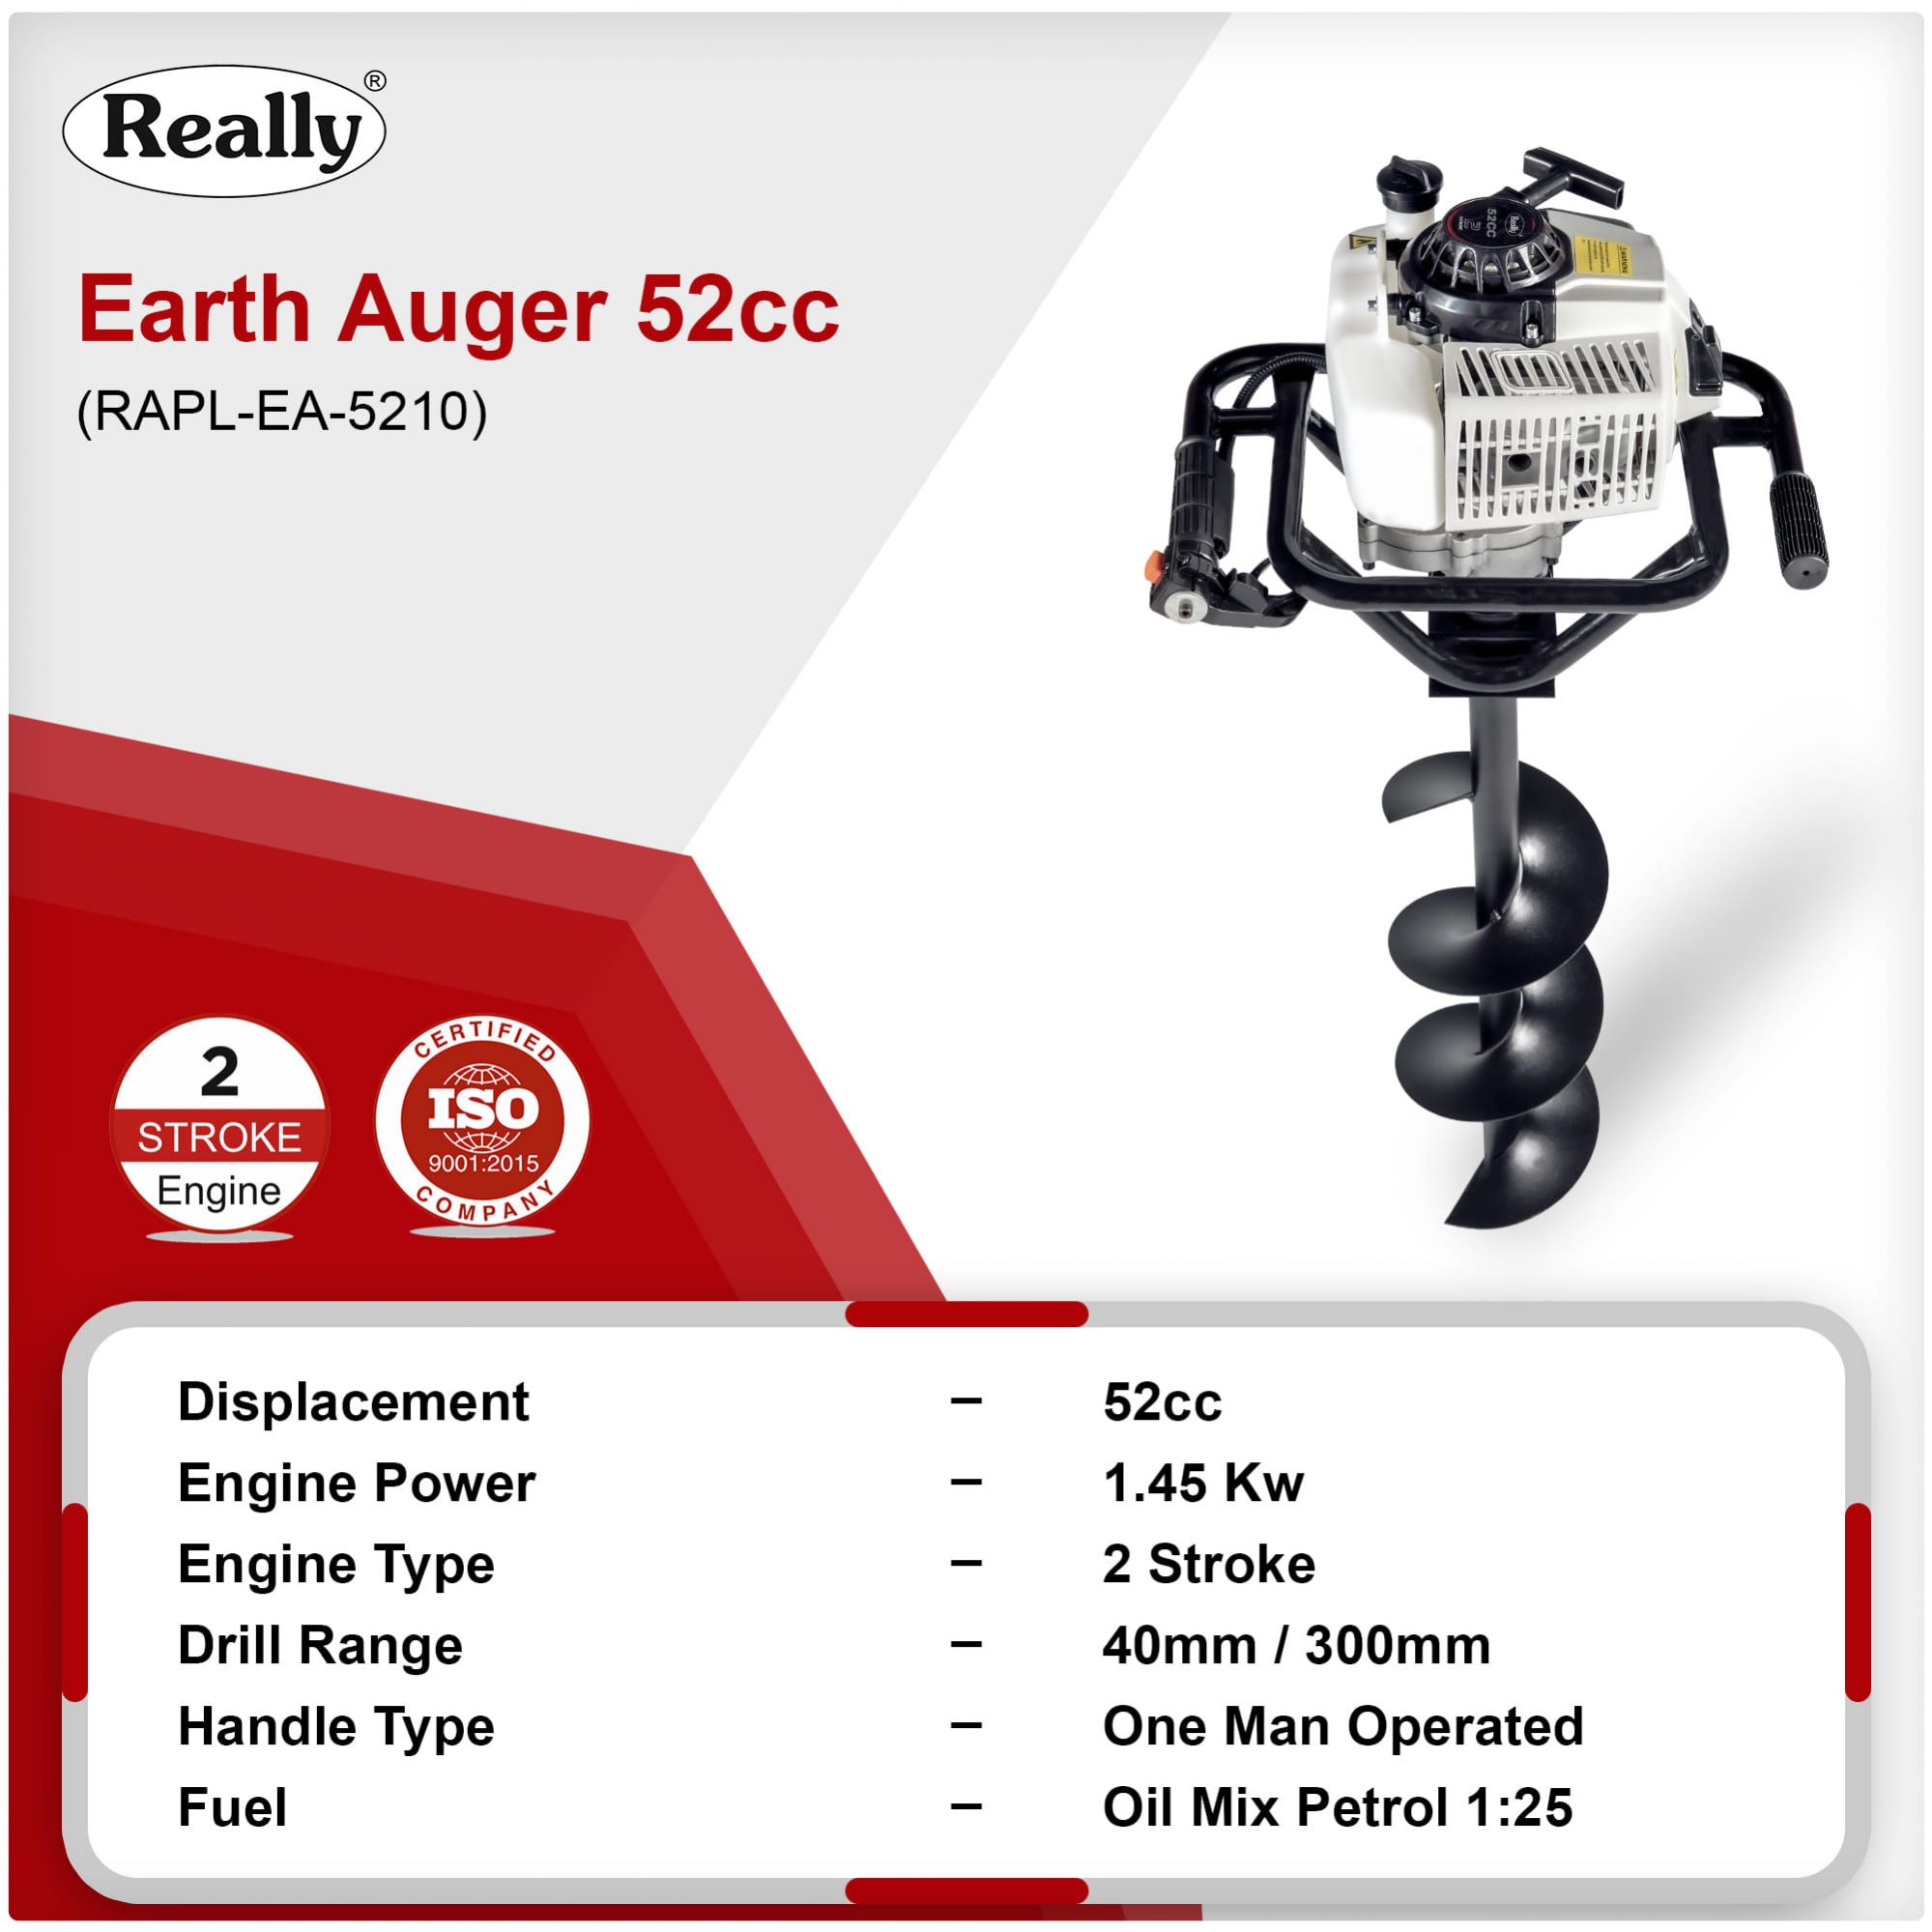 Really Earth Auger 52cc 2 Stroke (RAPL-EA-5210)